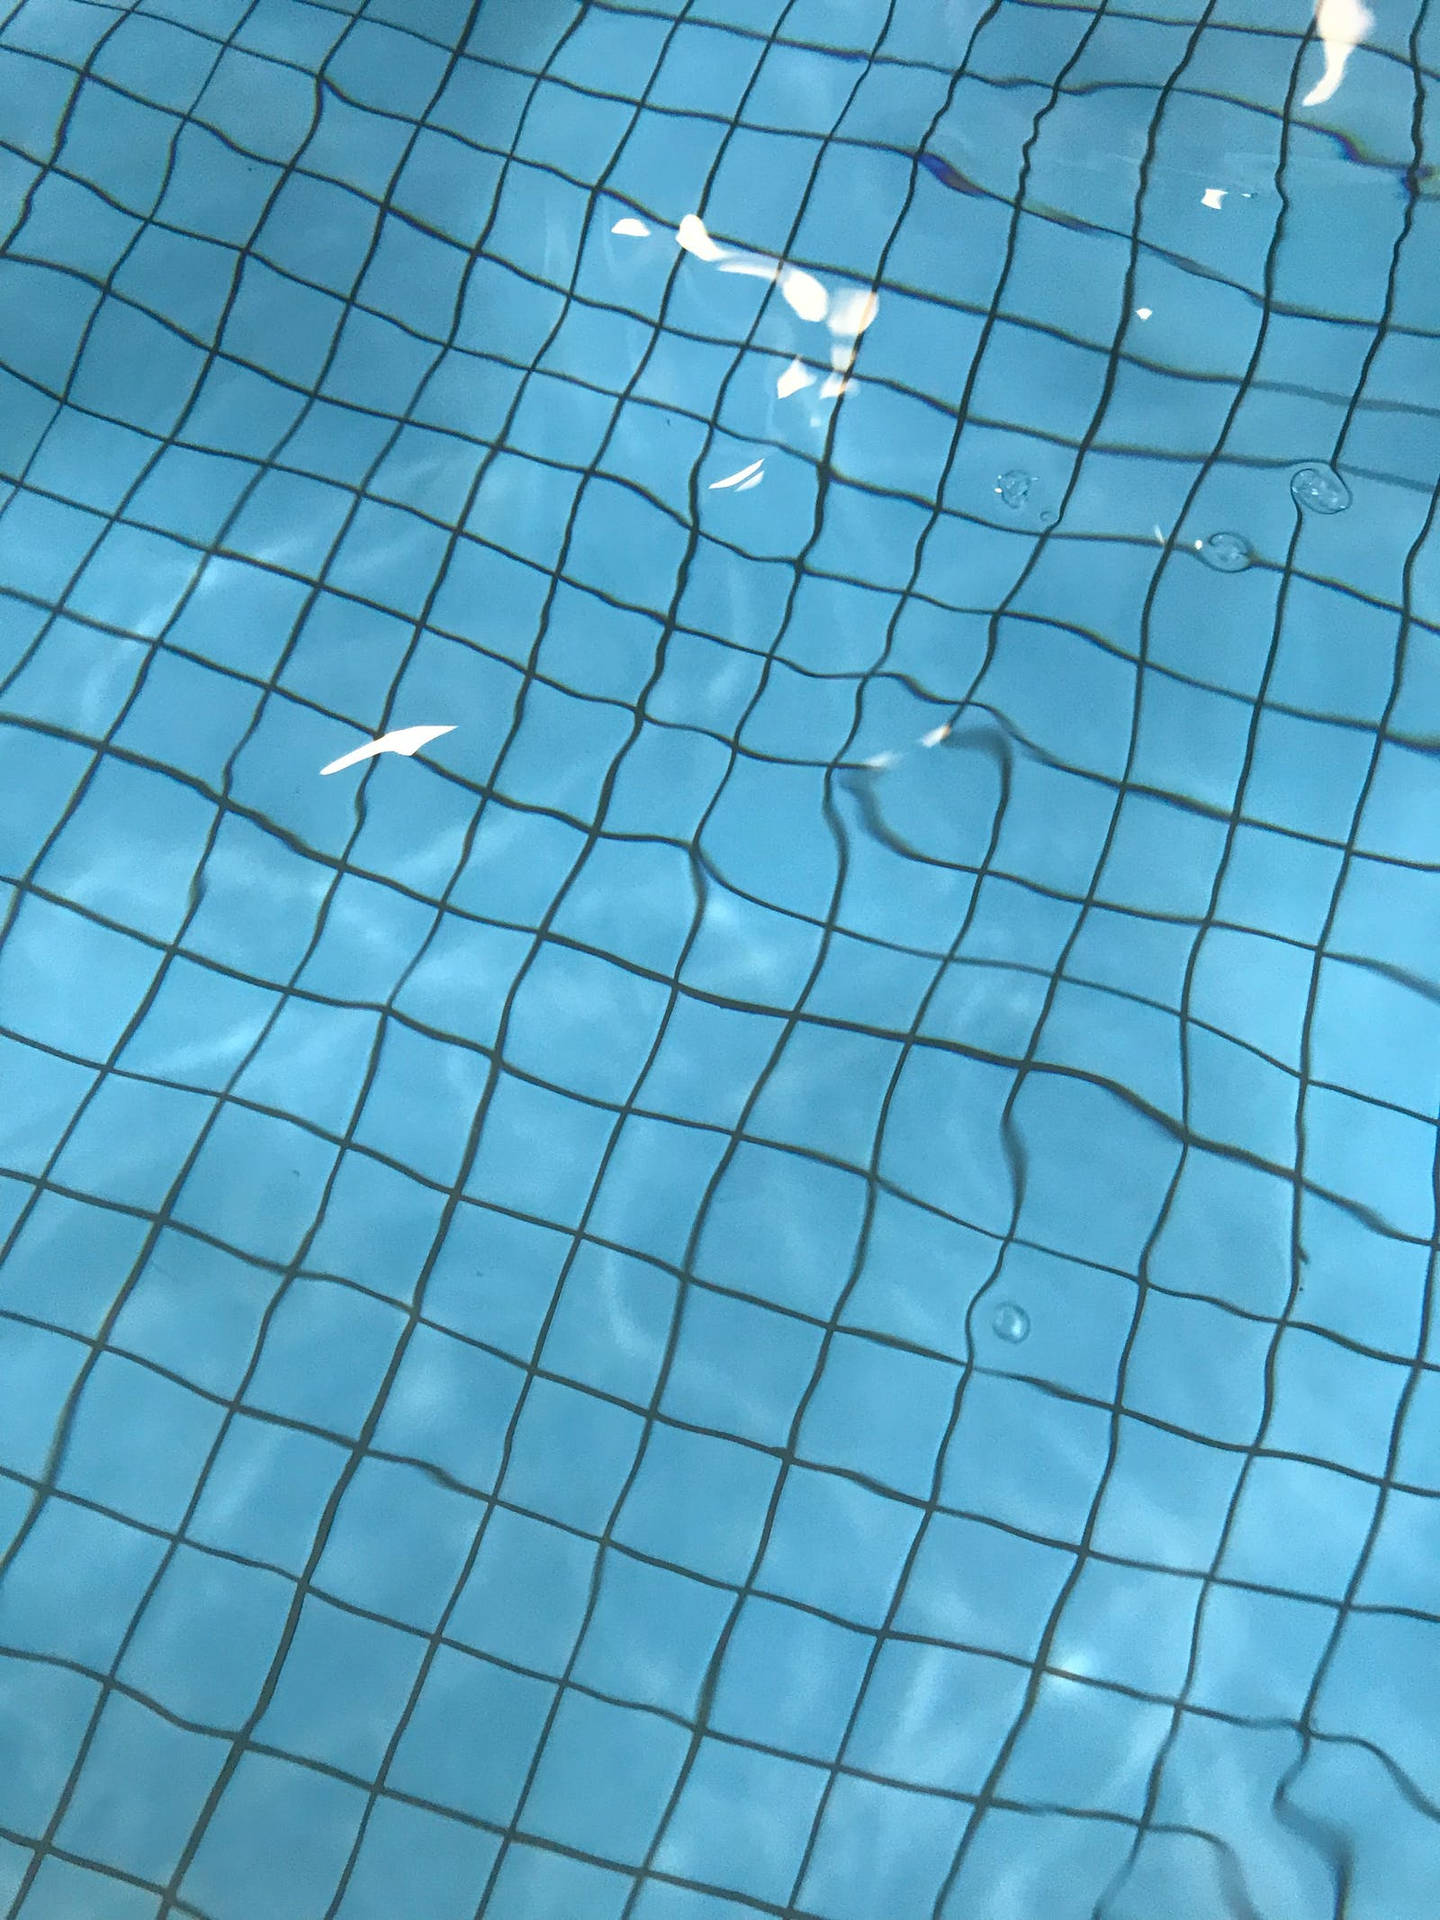 Simple Clean Swimming Pool